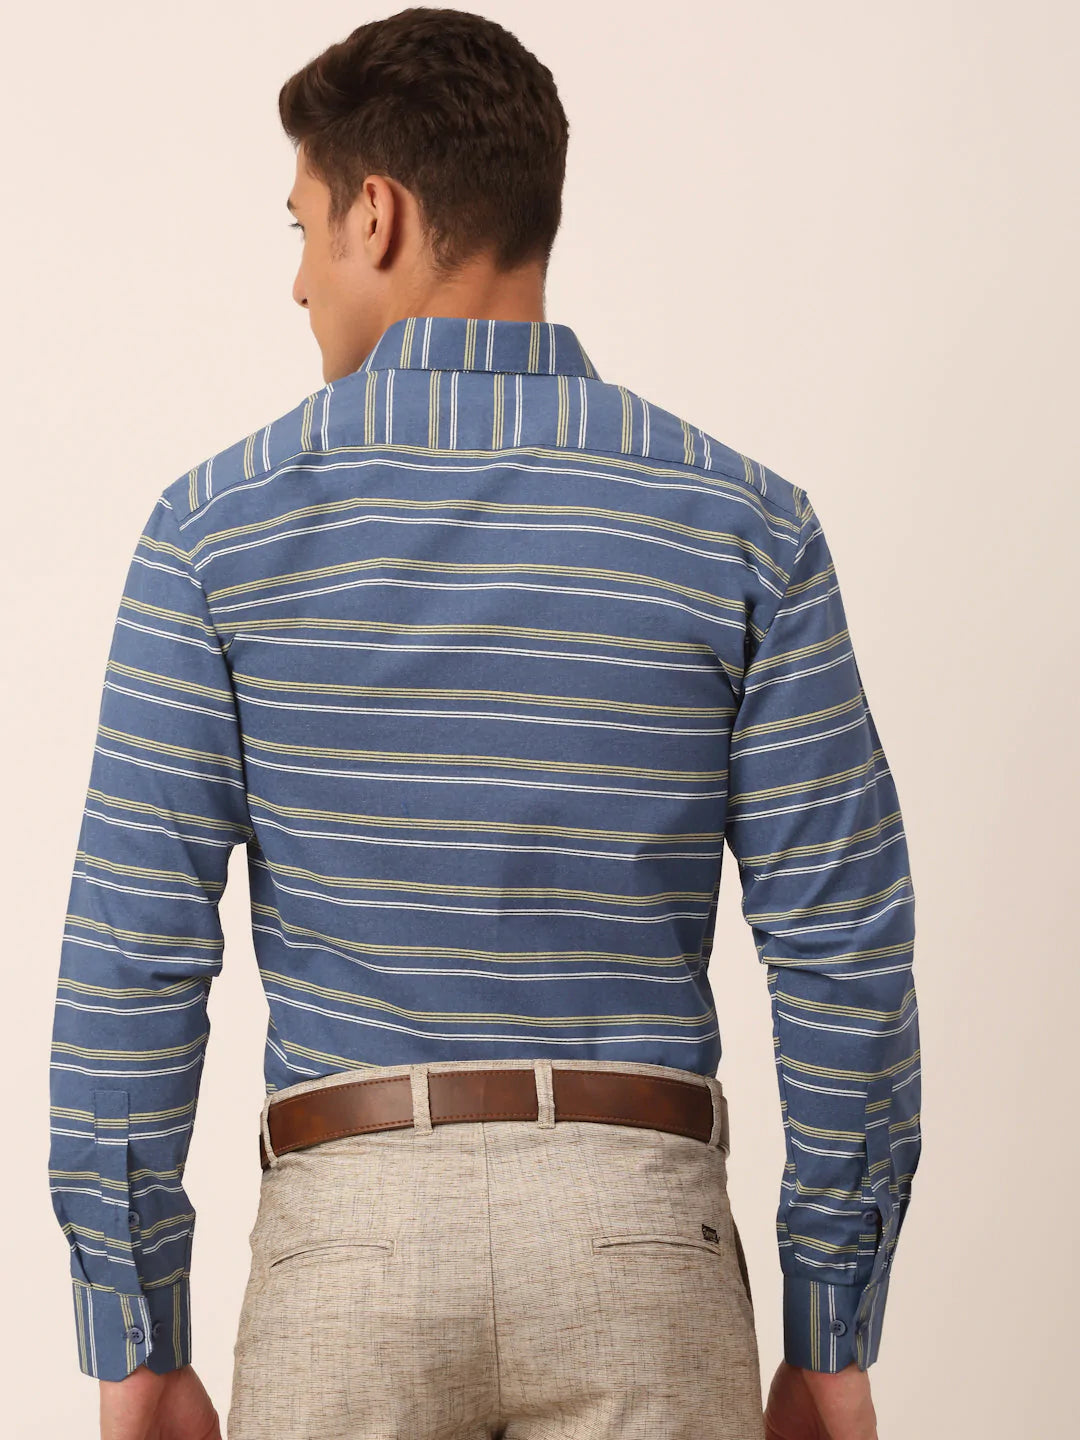 Jainish Men's  Cotton Striped Formal Shirts ( SF 820Blue )